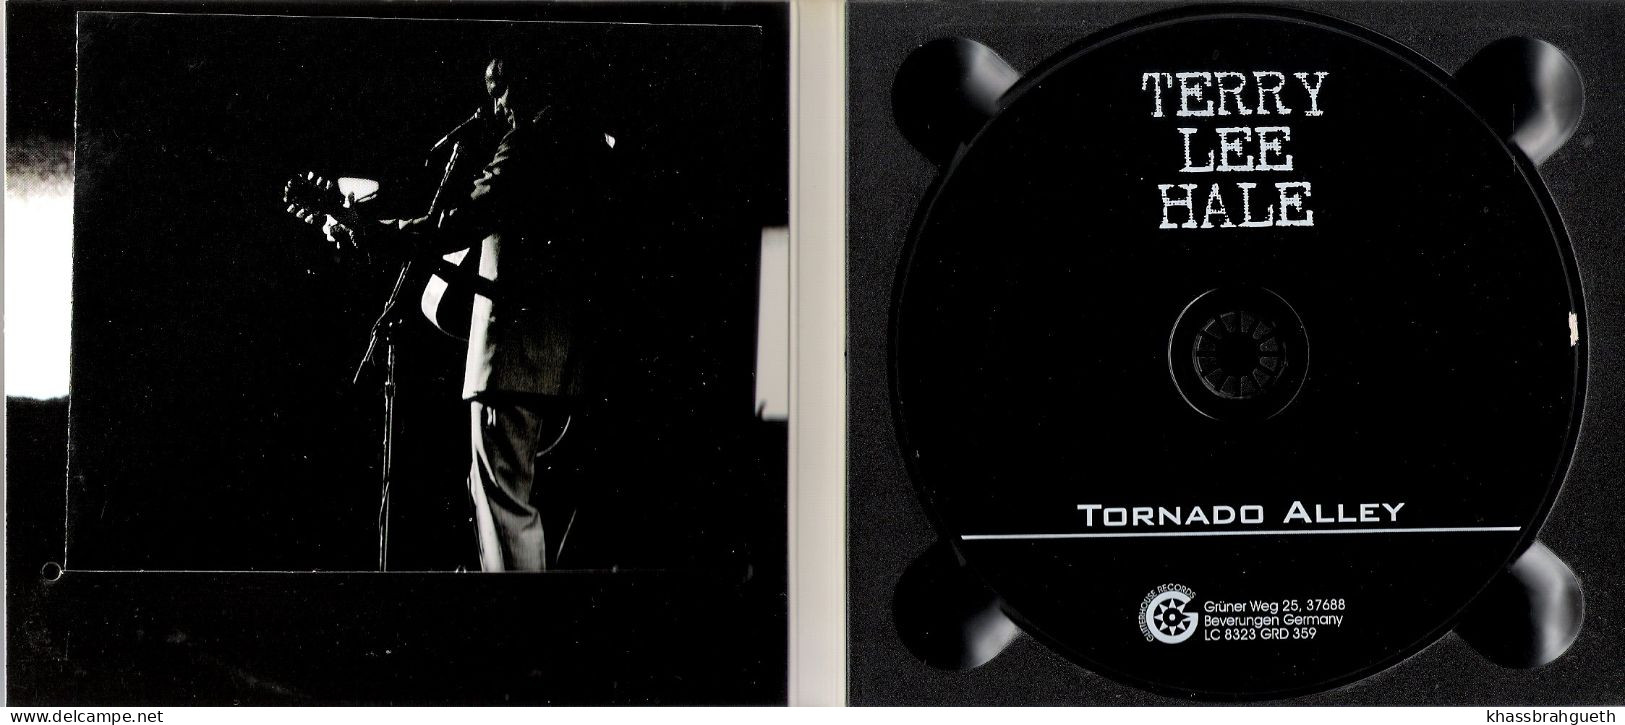 TERRY LEE HALE - 2 CD ALBUMS - FRONTIER MODEL + TORNADO ALLEY - GLITTERHOUSE RECORDS (1994/1995)